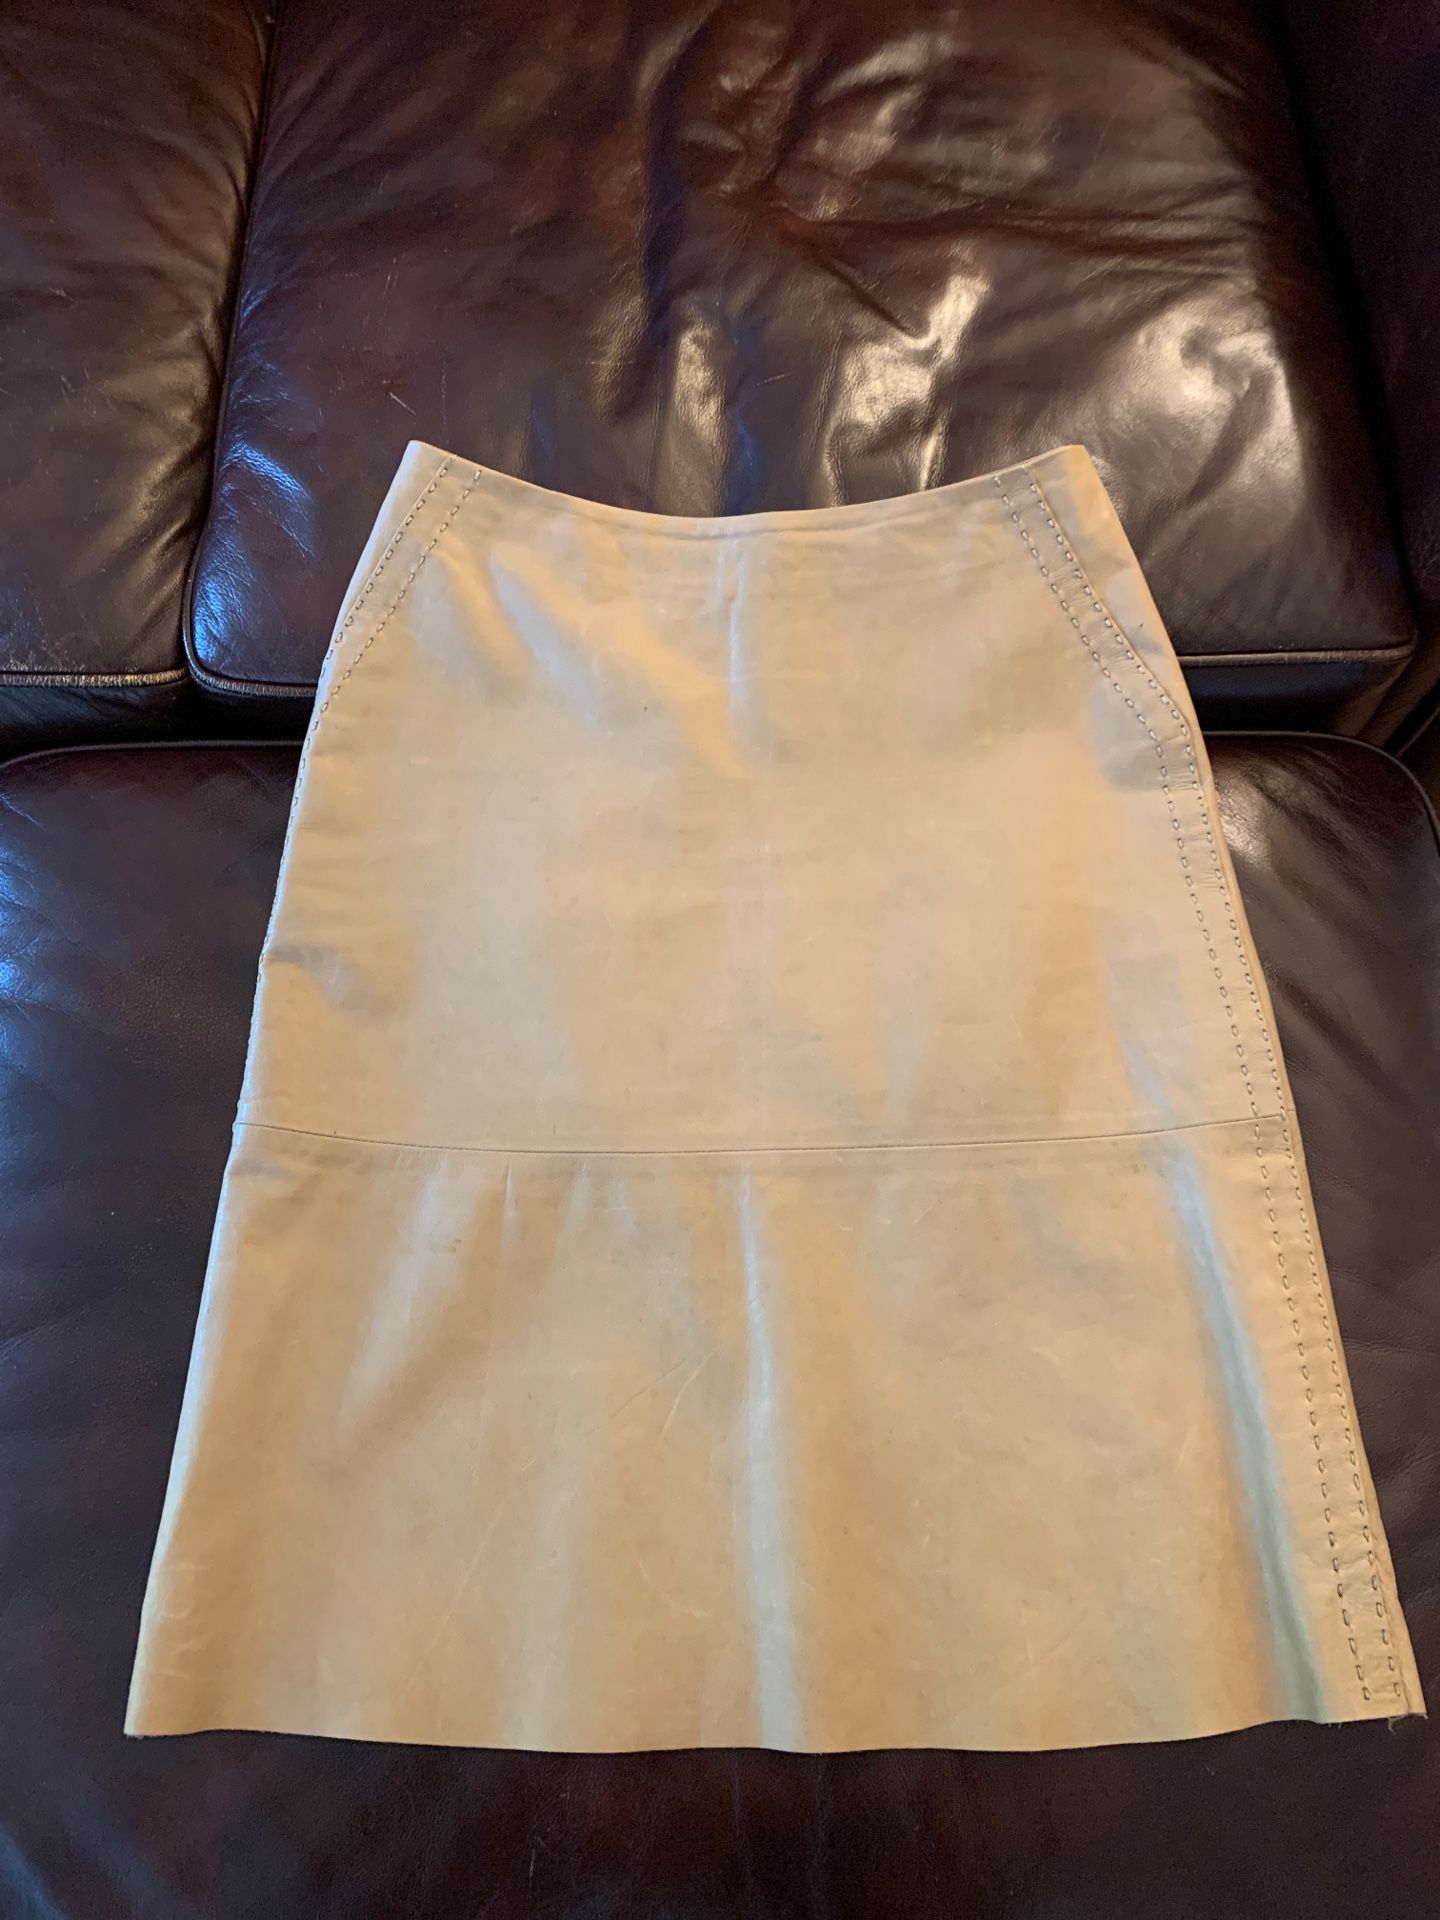 Banana Republic leather skirt - size 0